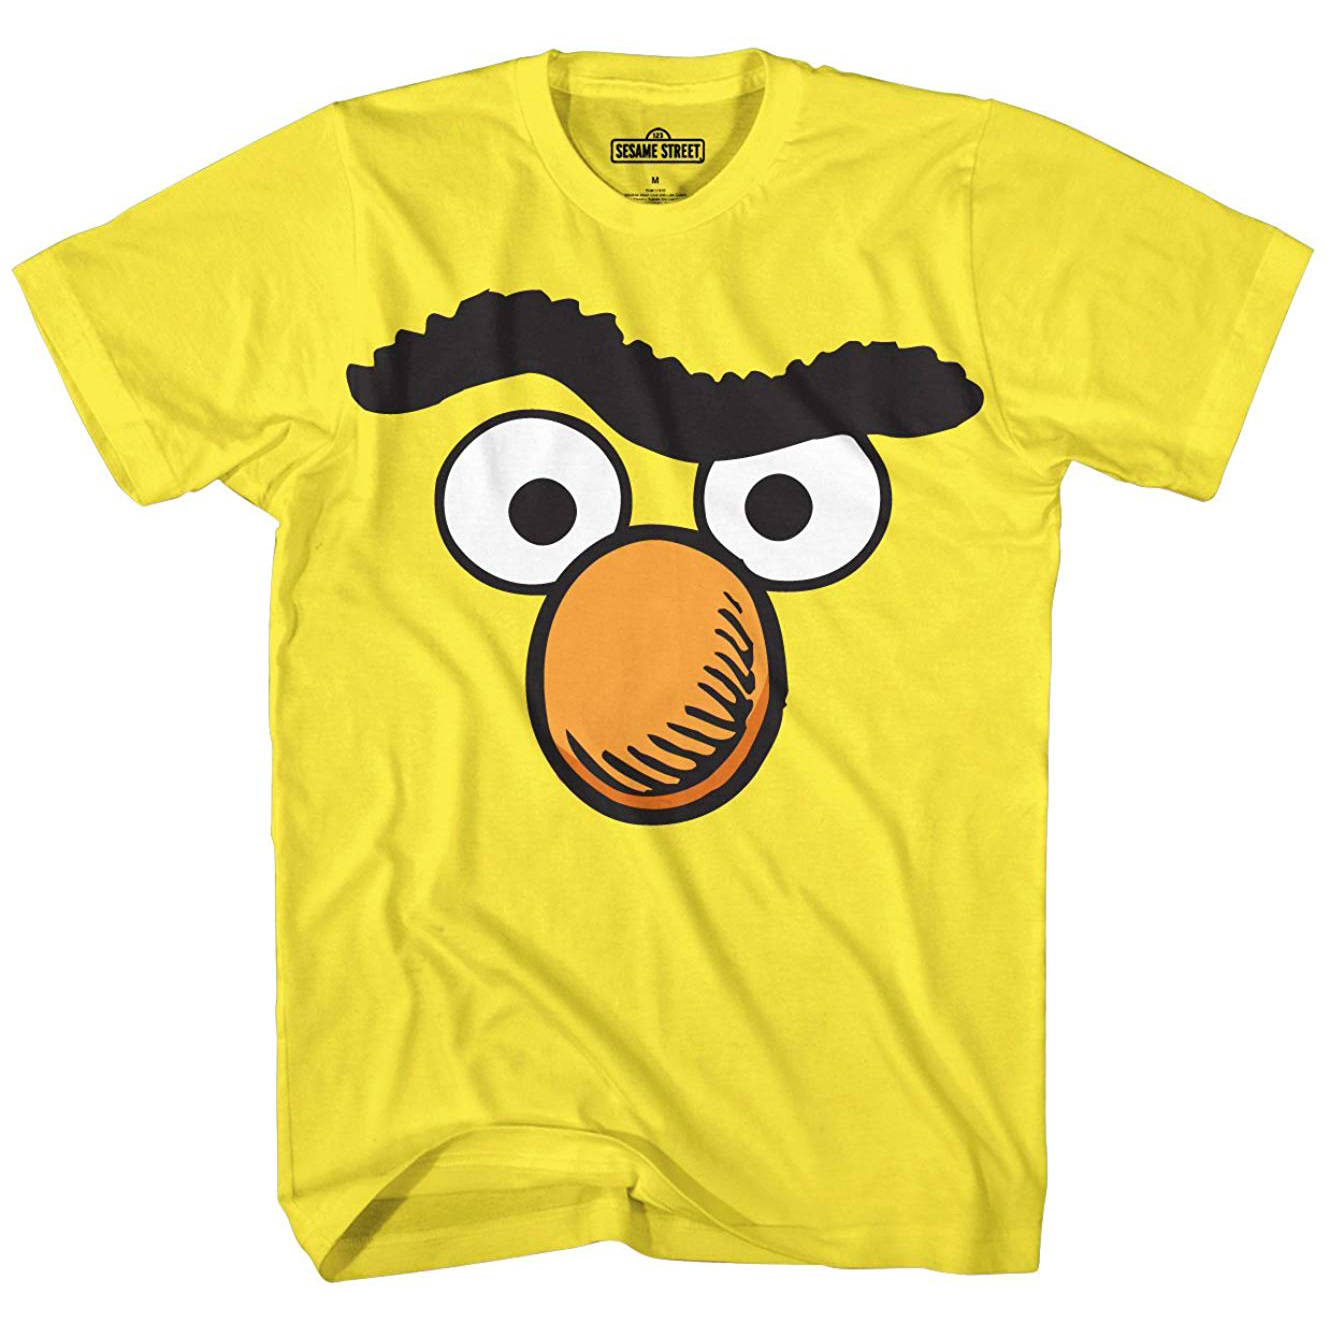 Sesame Street Bert Face Men's Graphic T-Shirt (Large) - image 1 of 1